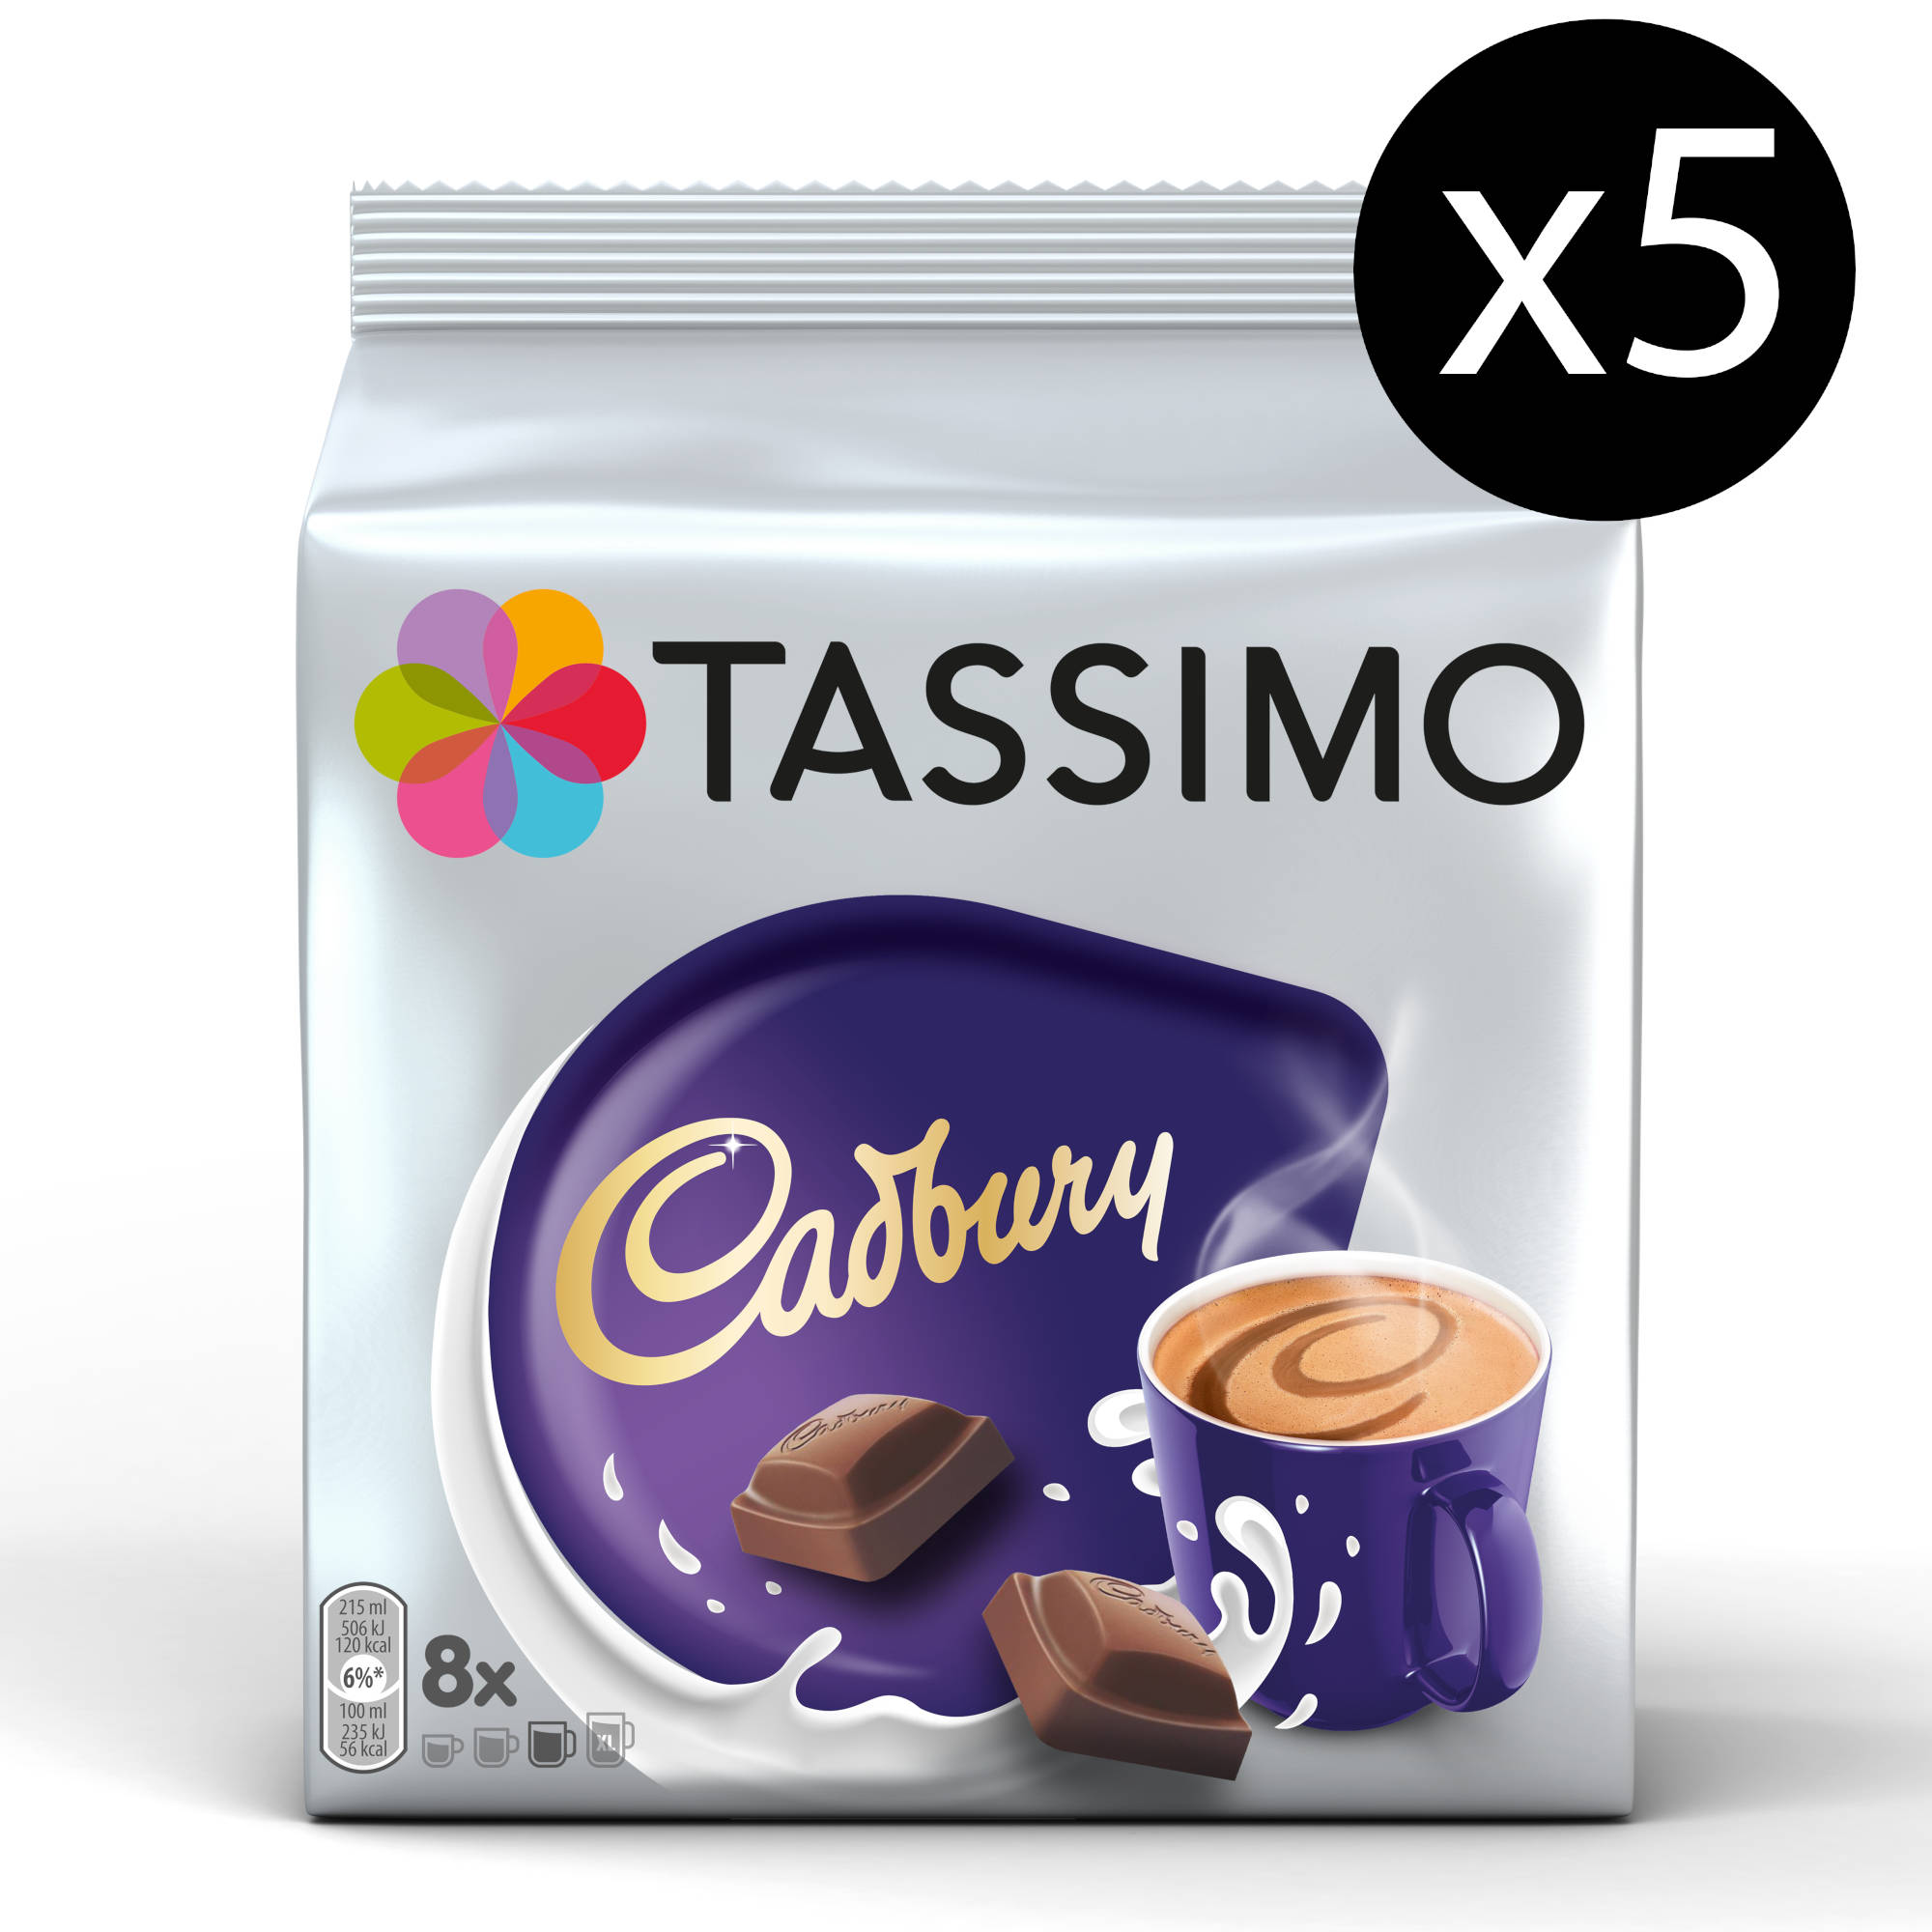 TASSIMO Cadbury Hot (Tassimo 5 Discs 8 (T-Disc Getränke x T Kakaokapseln Chocolate Maschine System))